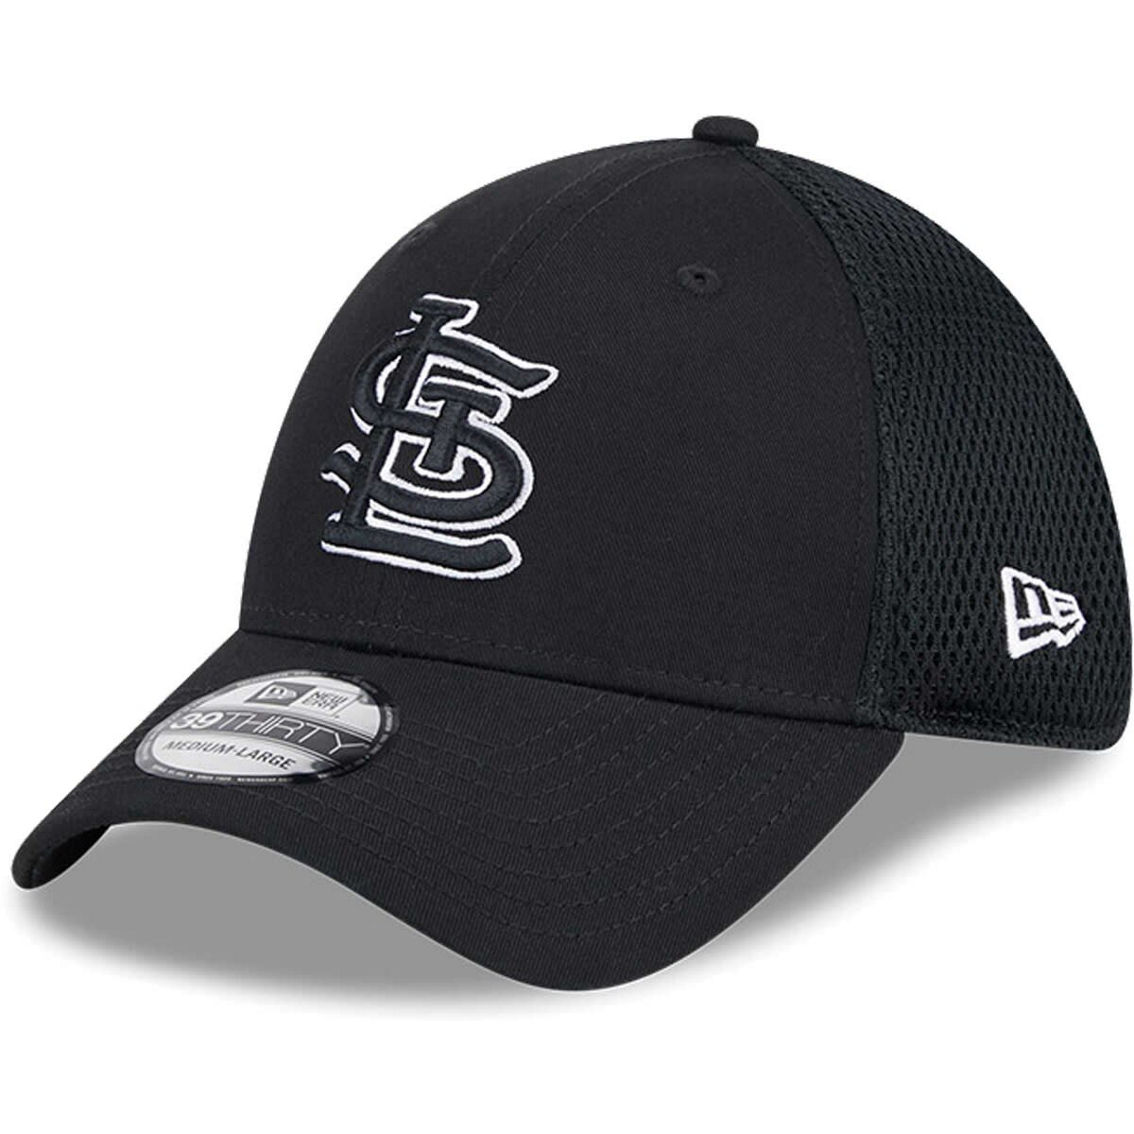 New Era Men's St. Louis Cardinals Evergreen Black & White Neo 39THIRTY Flex Hat - Image 2 of 4